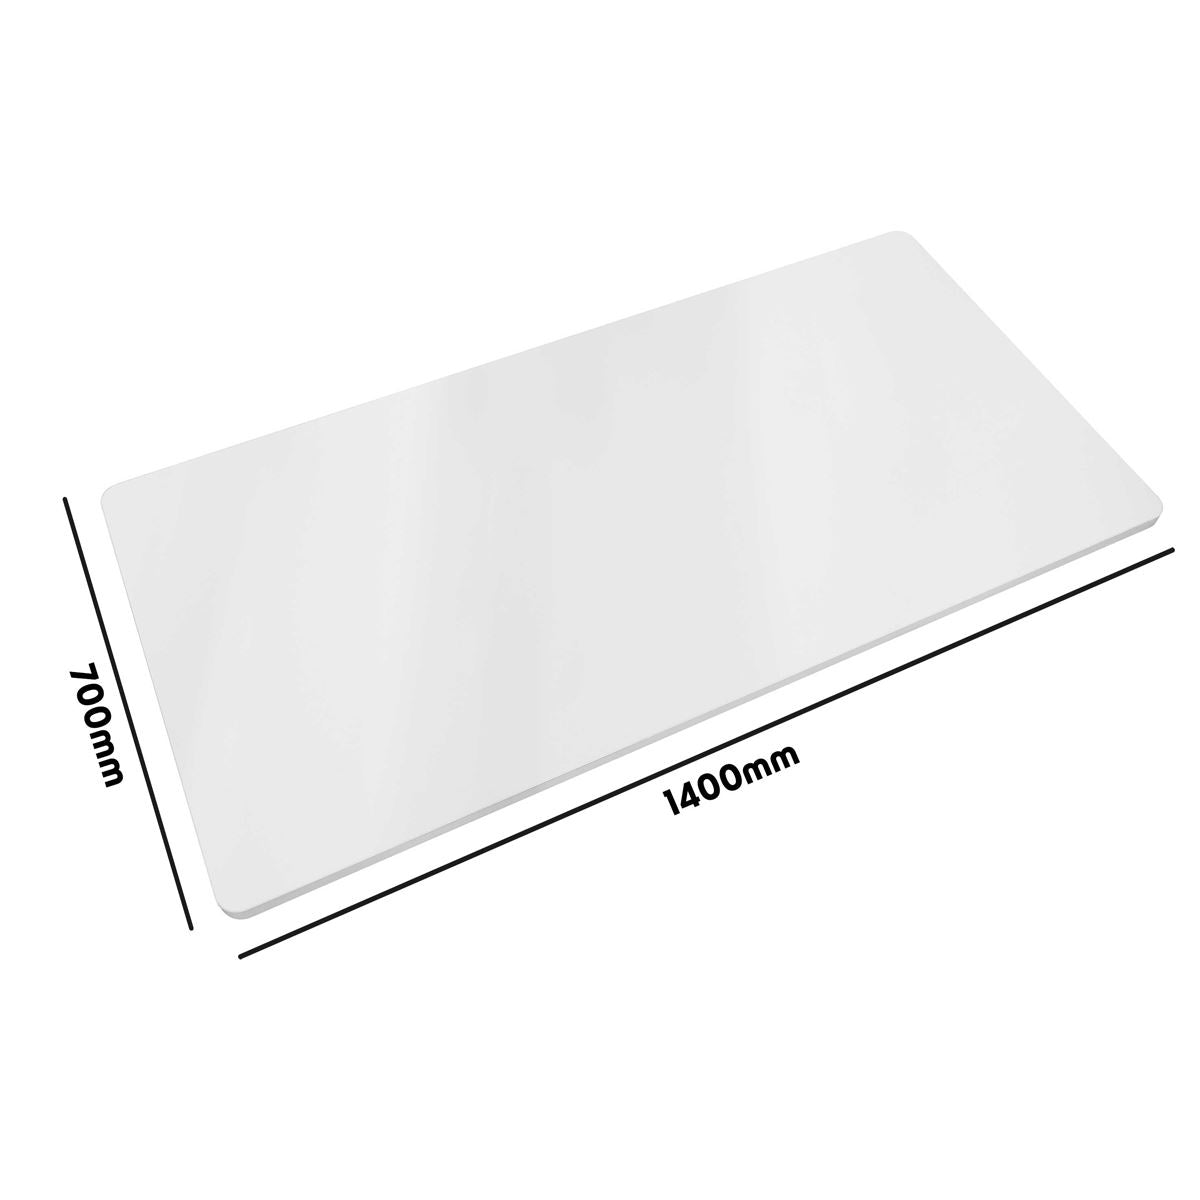 Dellonda White Rectangular Desktop 1400 x 700mm, 1" Thickness - DH19